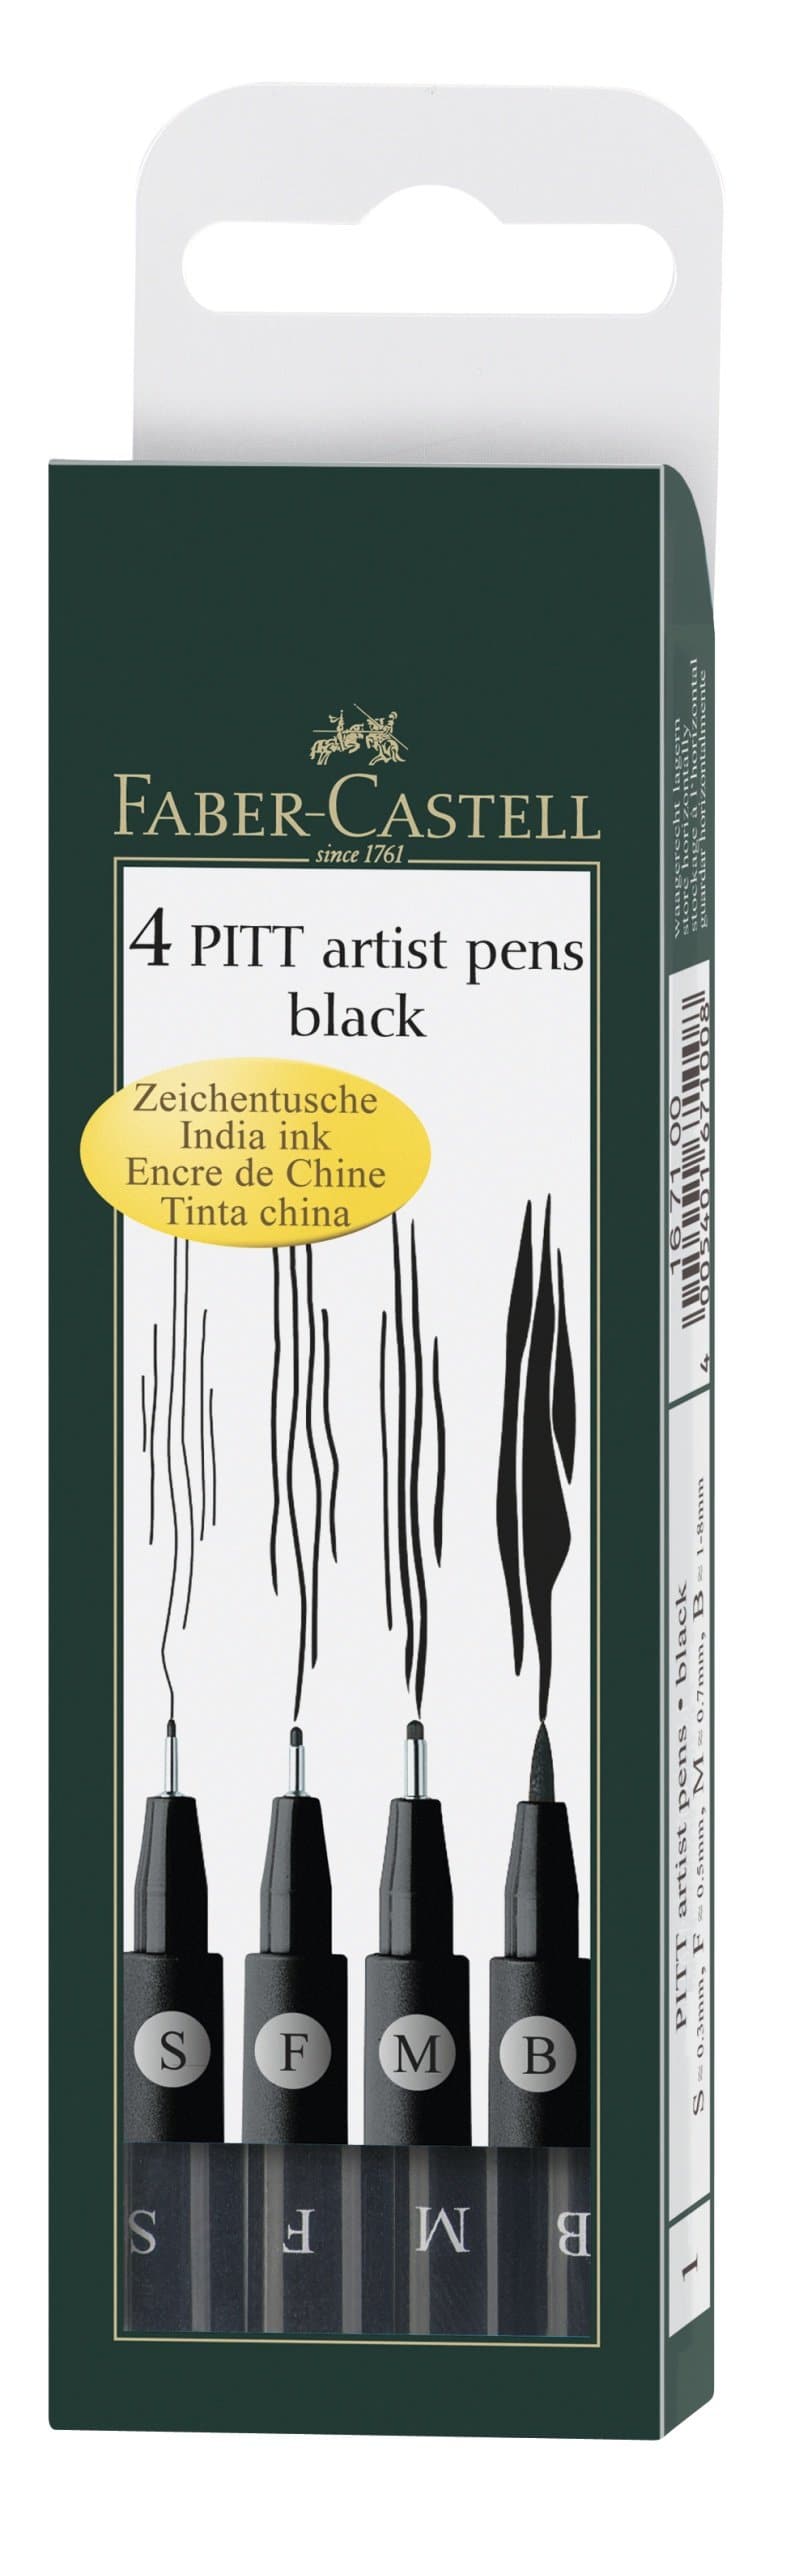 Pitt Artist Pen black box of 4 (S, F, M, B) - Blesket Canada